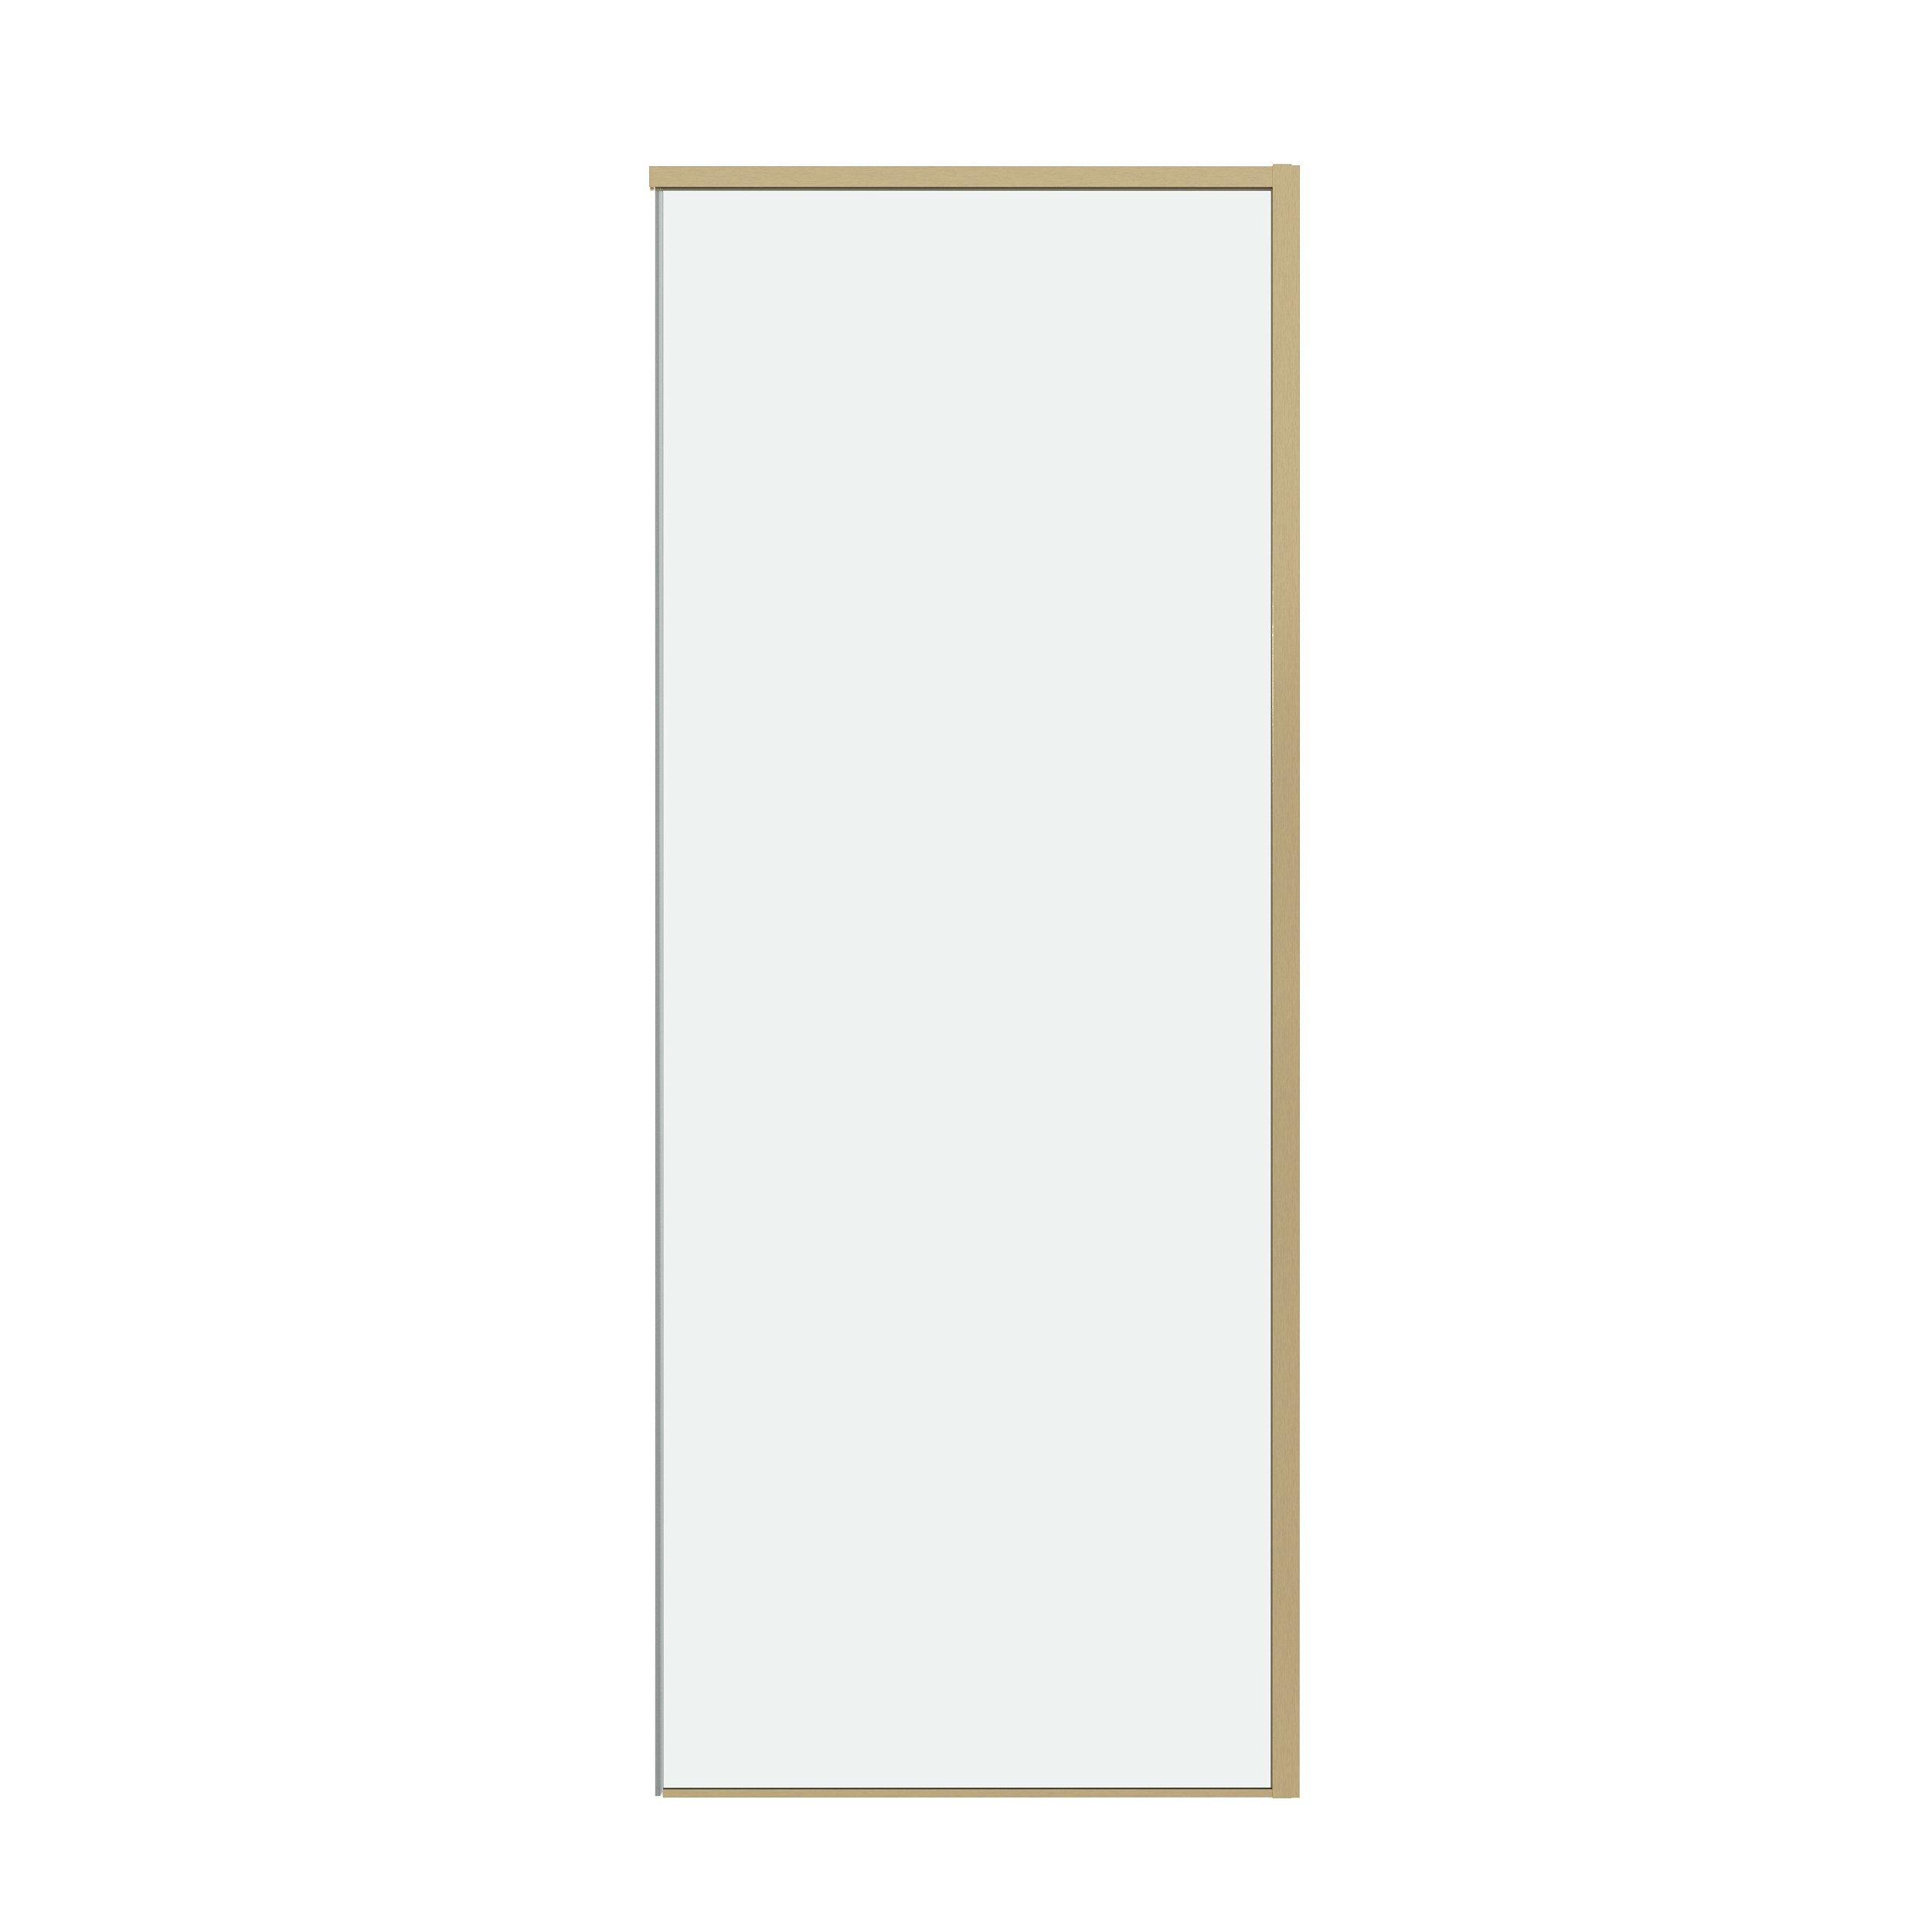 Боковая стенка Grossman Galaxy 70x195 200.K33.01.70.32.00 стекло прозрачное, профиль золото - фото 1